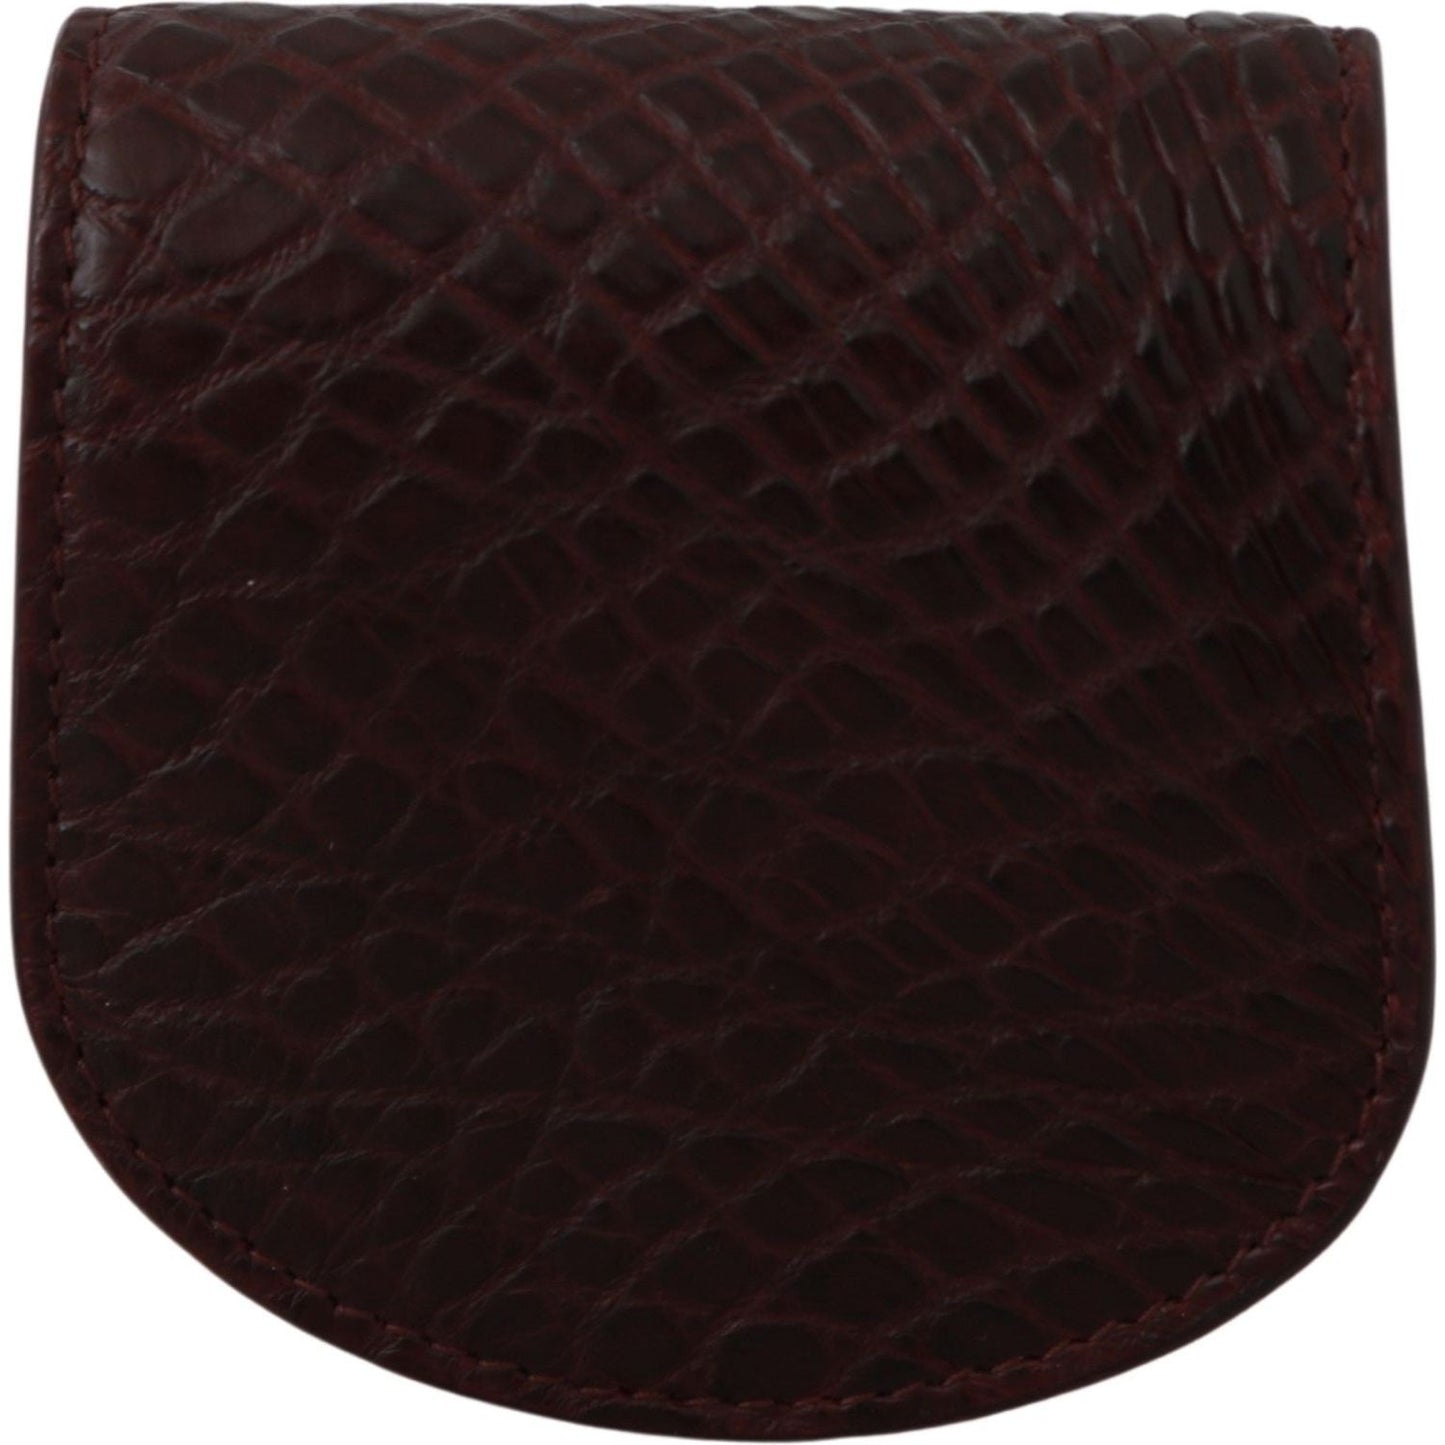 Dolce & Gabbana Refined Caimano Leather Coin Case brown-exotic-skin-pocket-condom-case-holder Condom Case IMG_0257-952d1c54-1b8.jpg